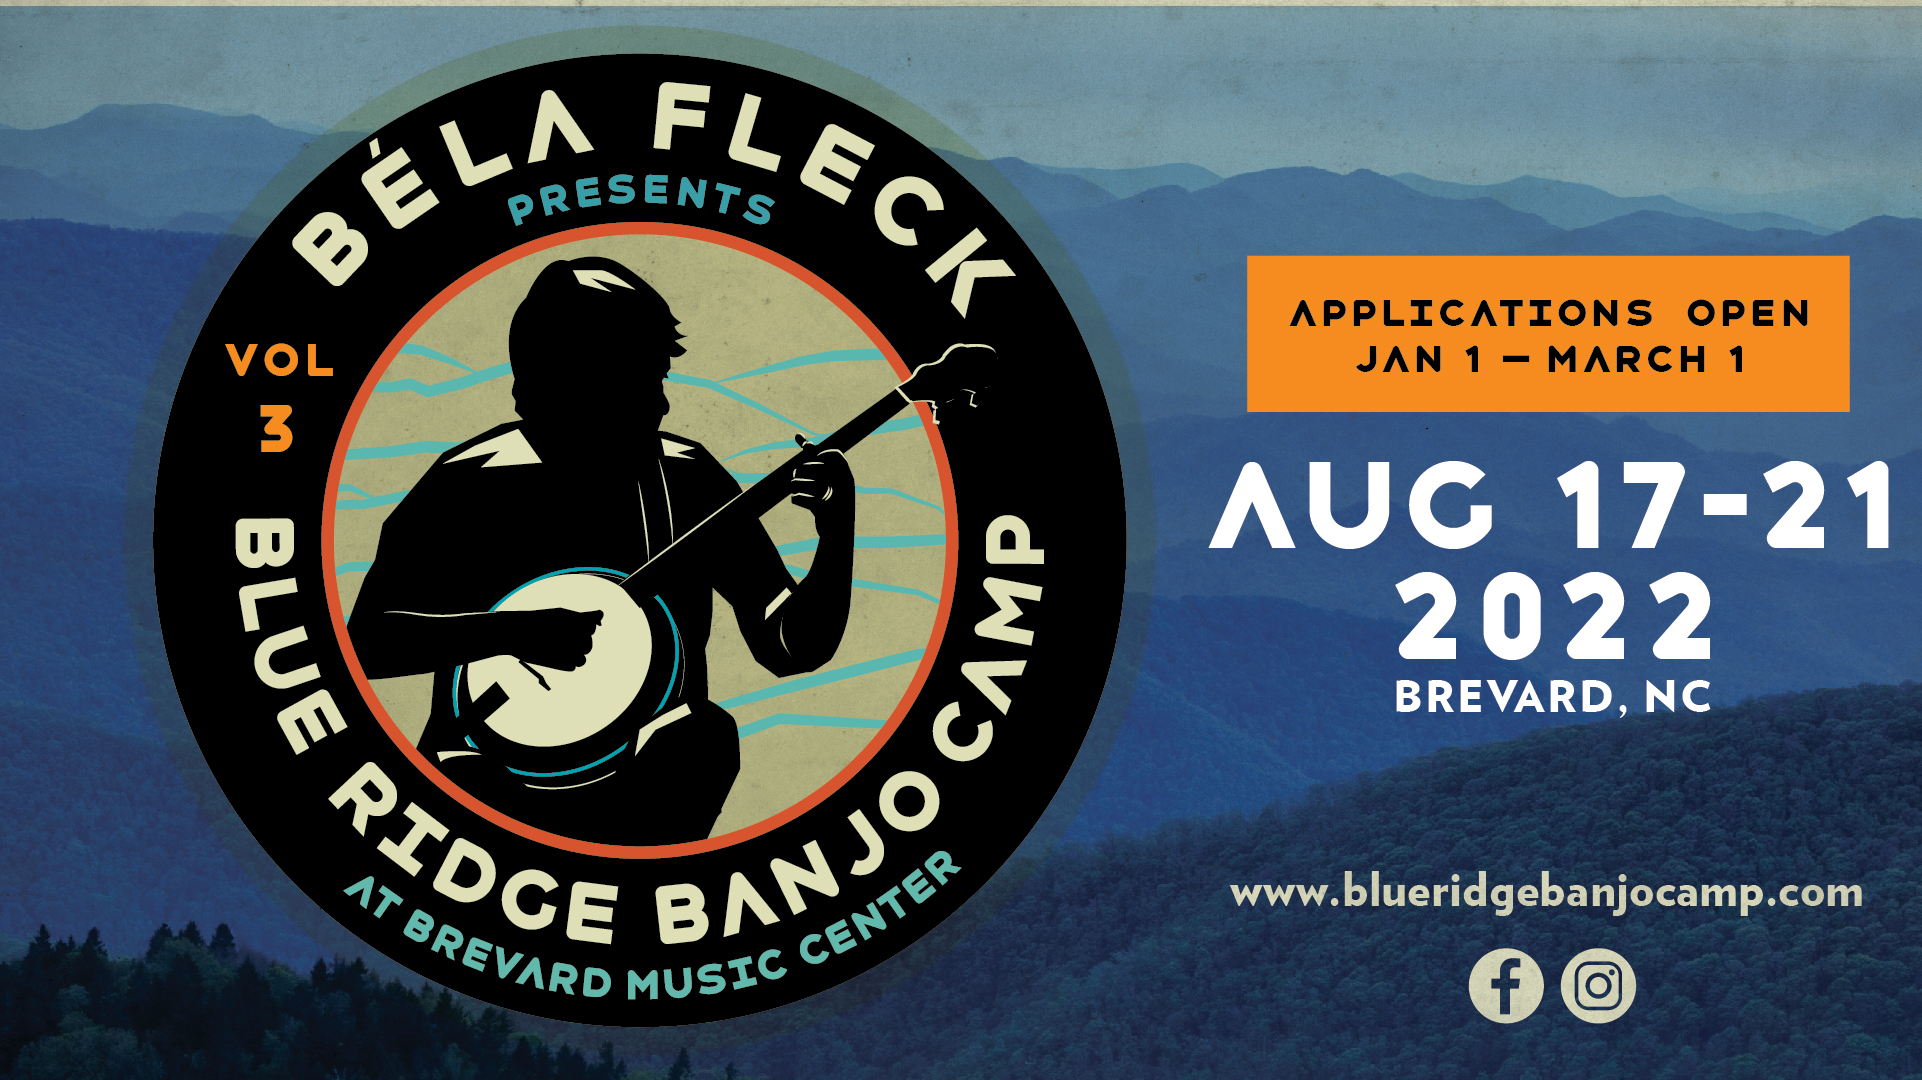 BÉLA FLECK Announces 3rd Annual BLUE RIDGE BANJO CAMP at Brevard Music